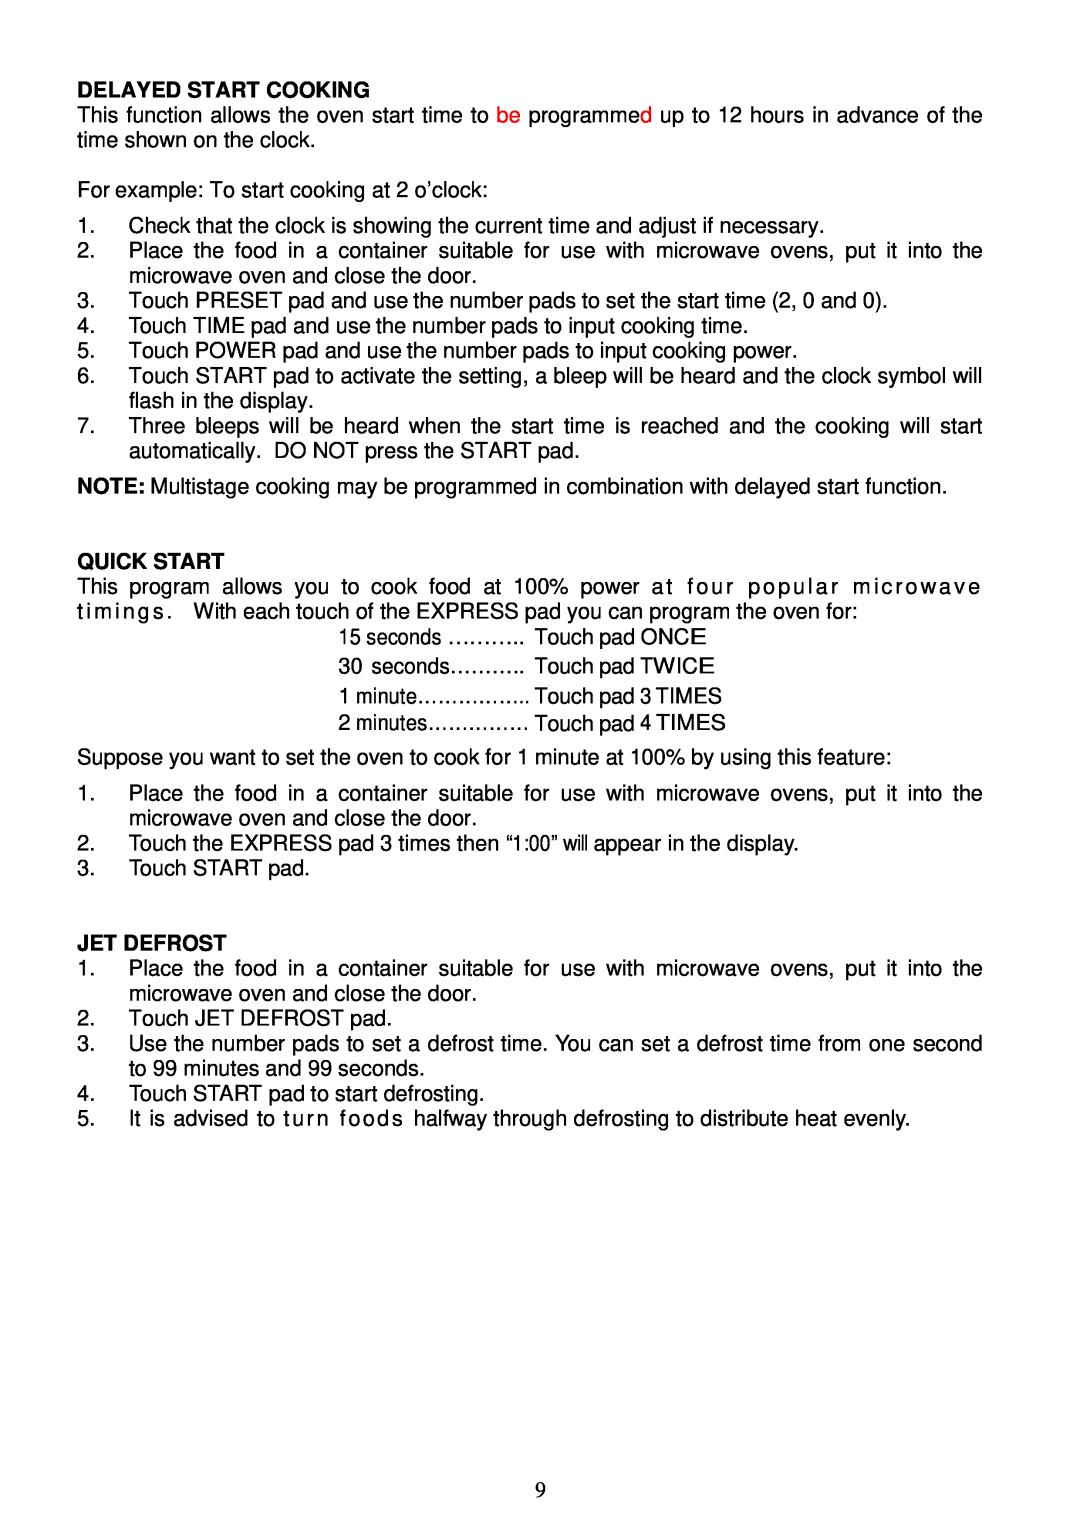 Russell Hobbs RHM1719B user manual Delayed Start Cooking, Quick Start, Jet Defrost 